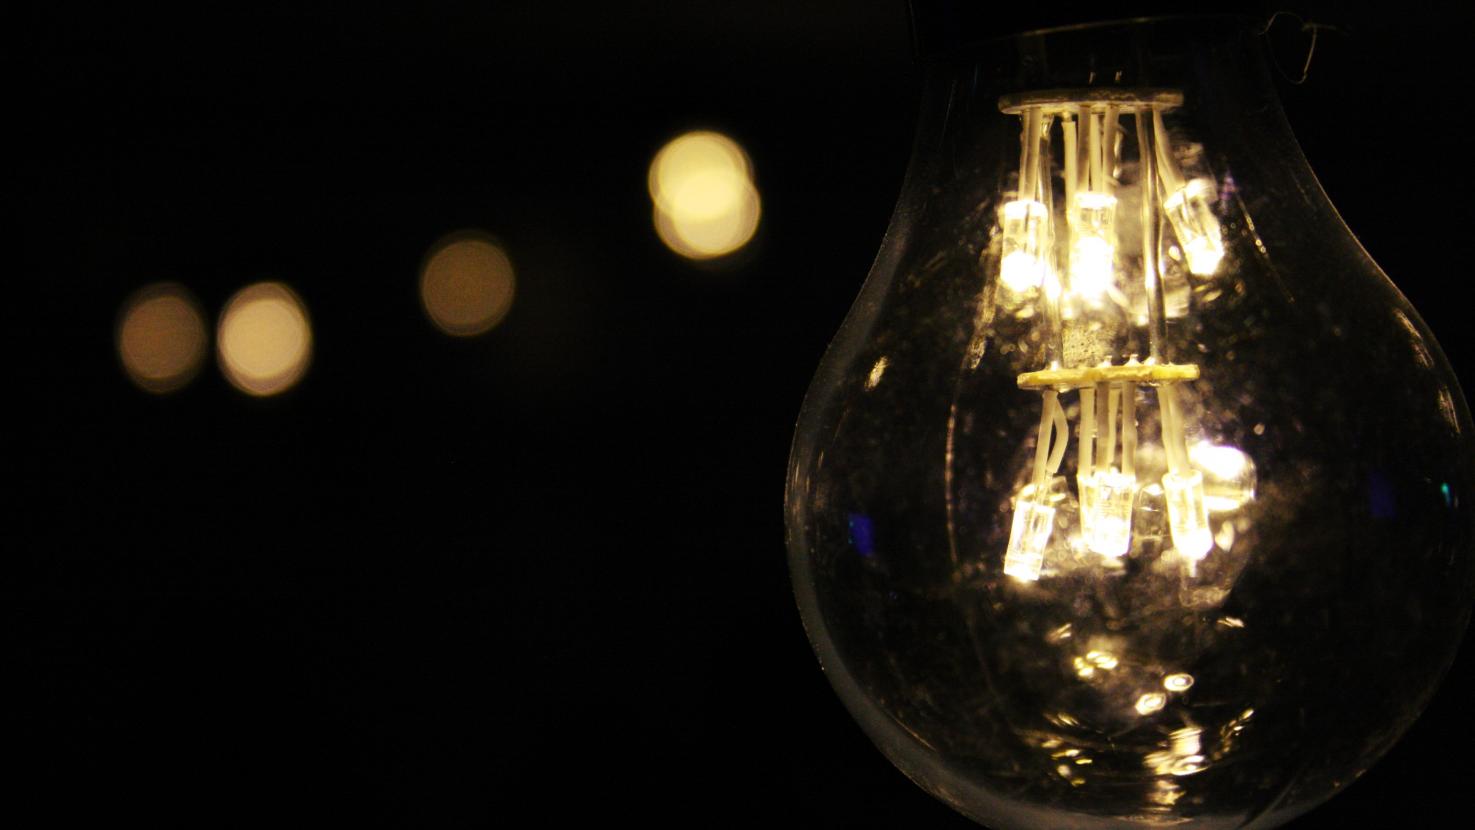 shining lightbulb with dark blurred background